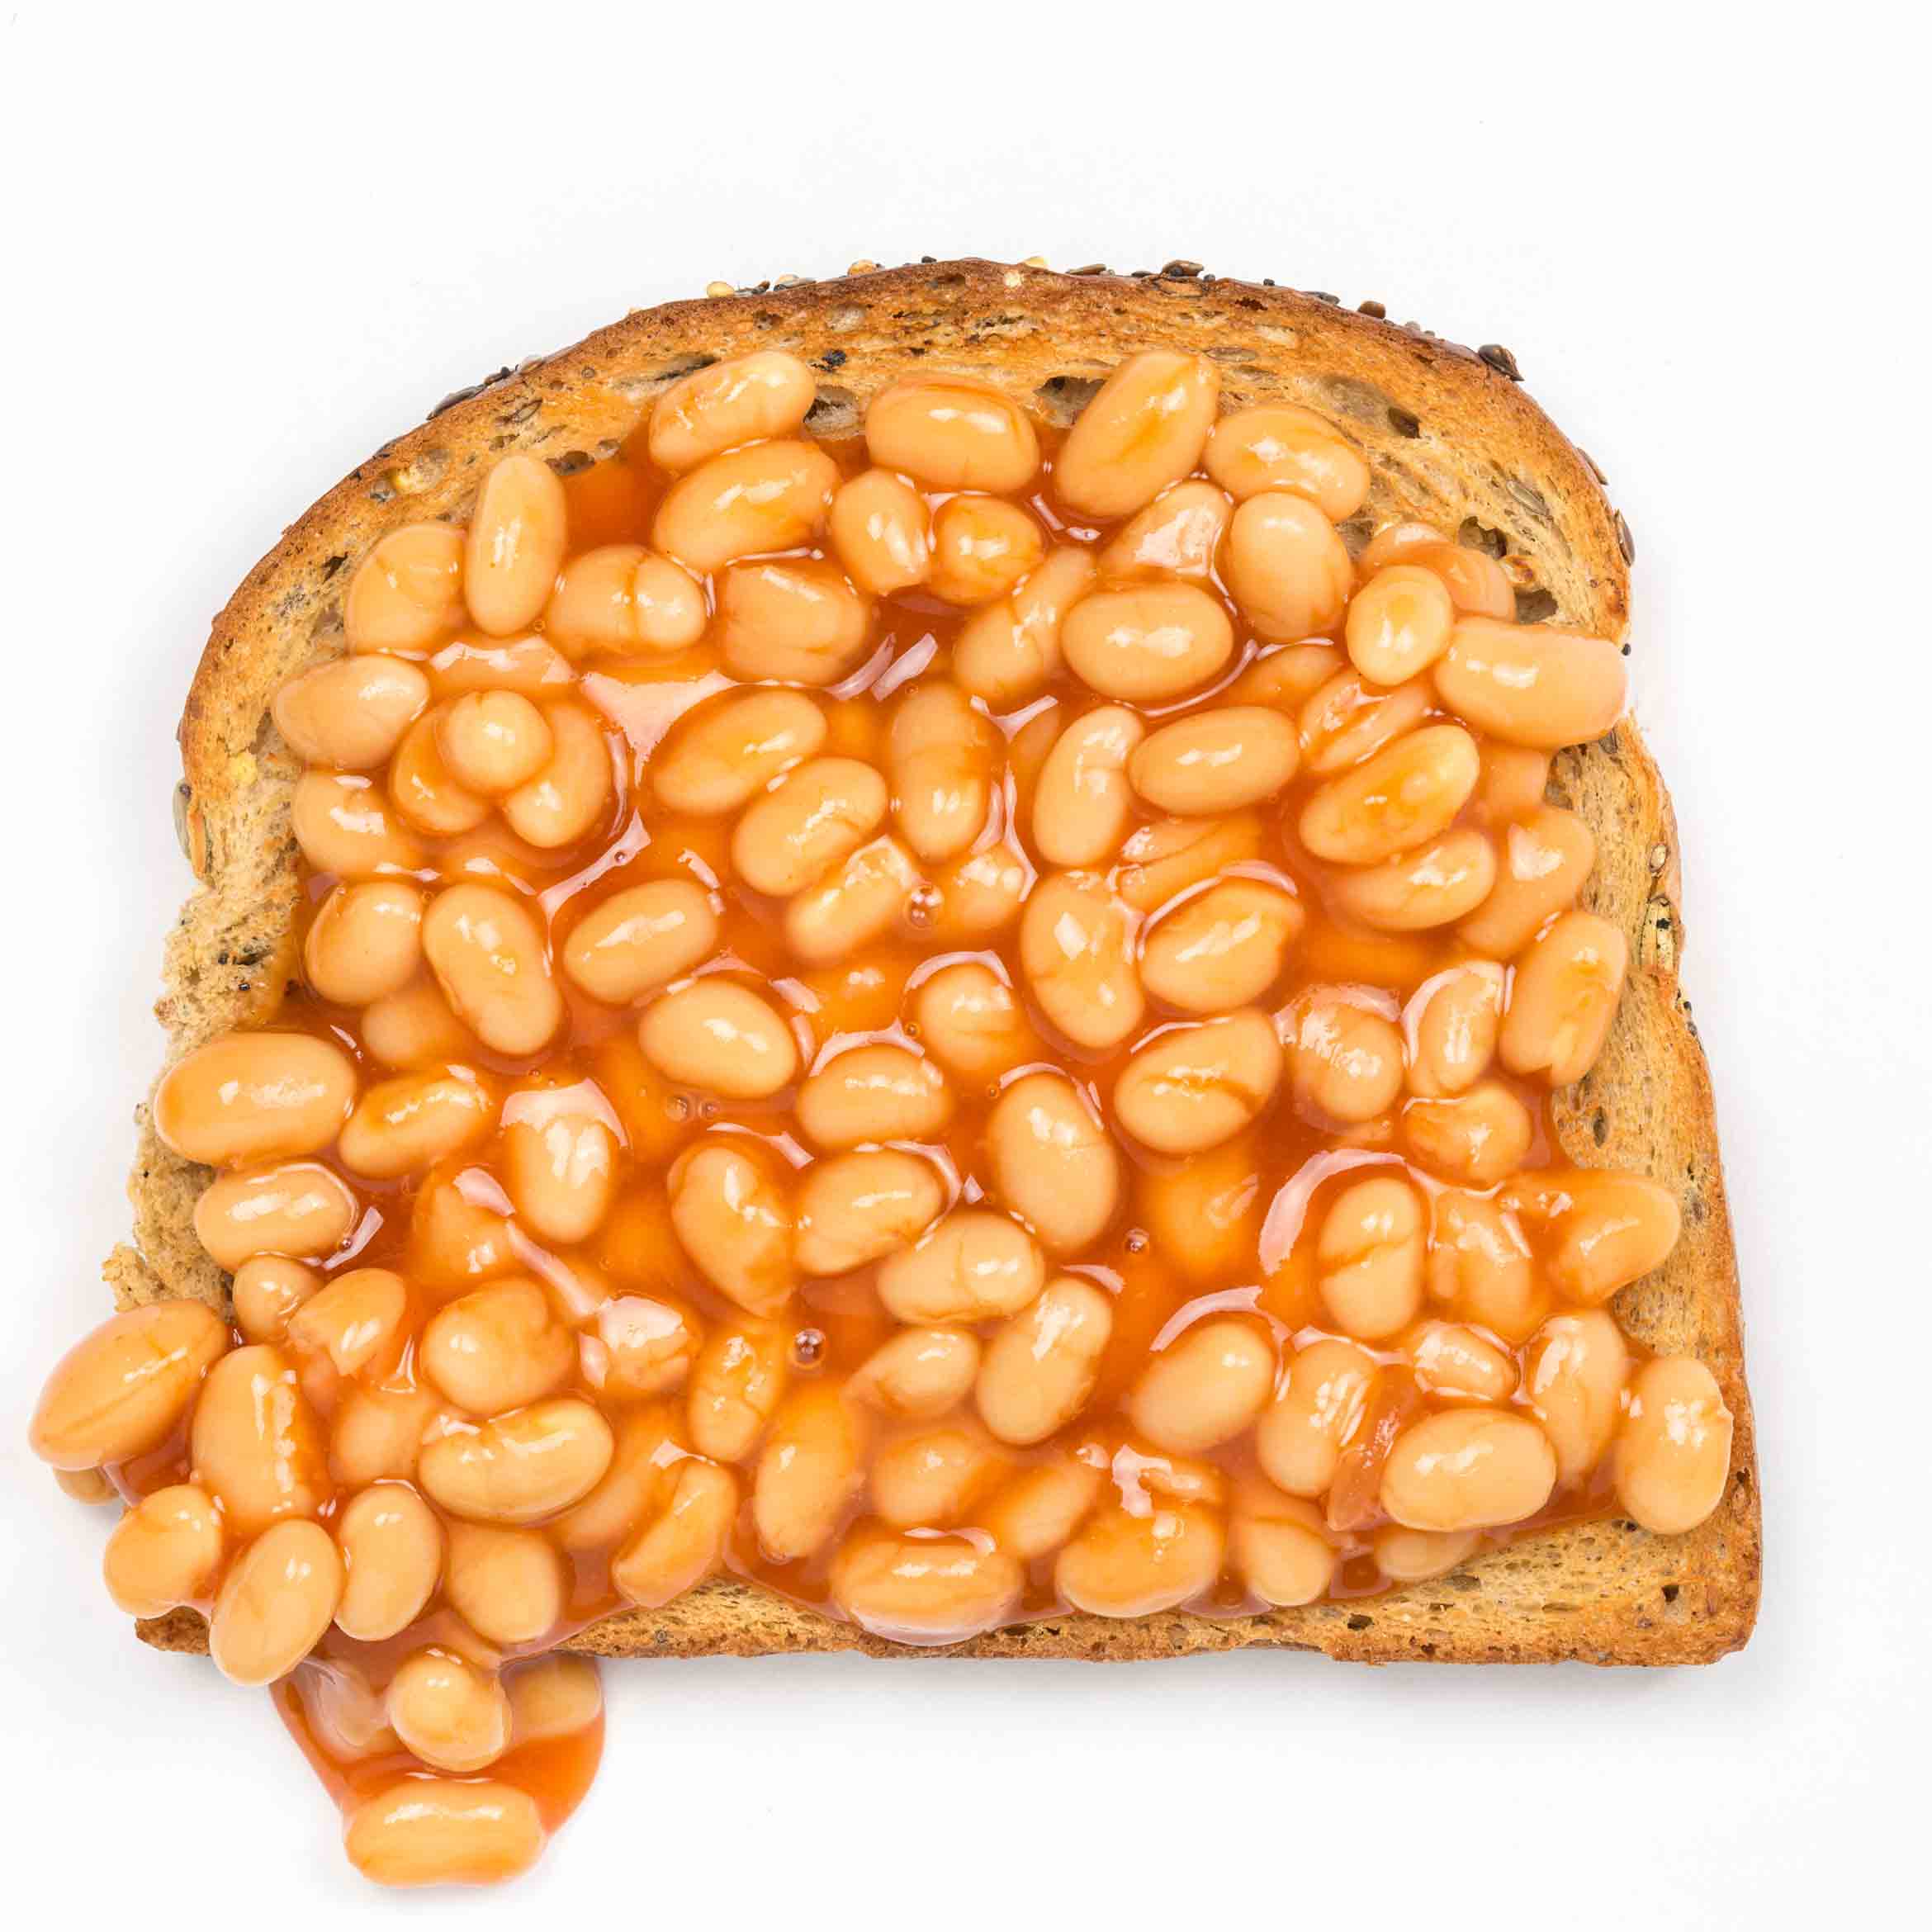 Baked Beans on toast